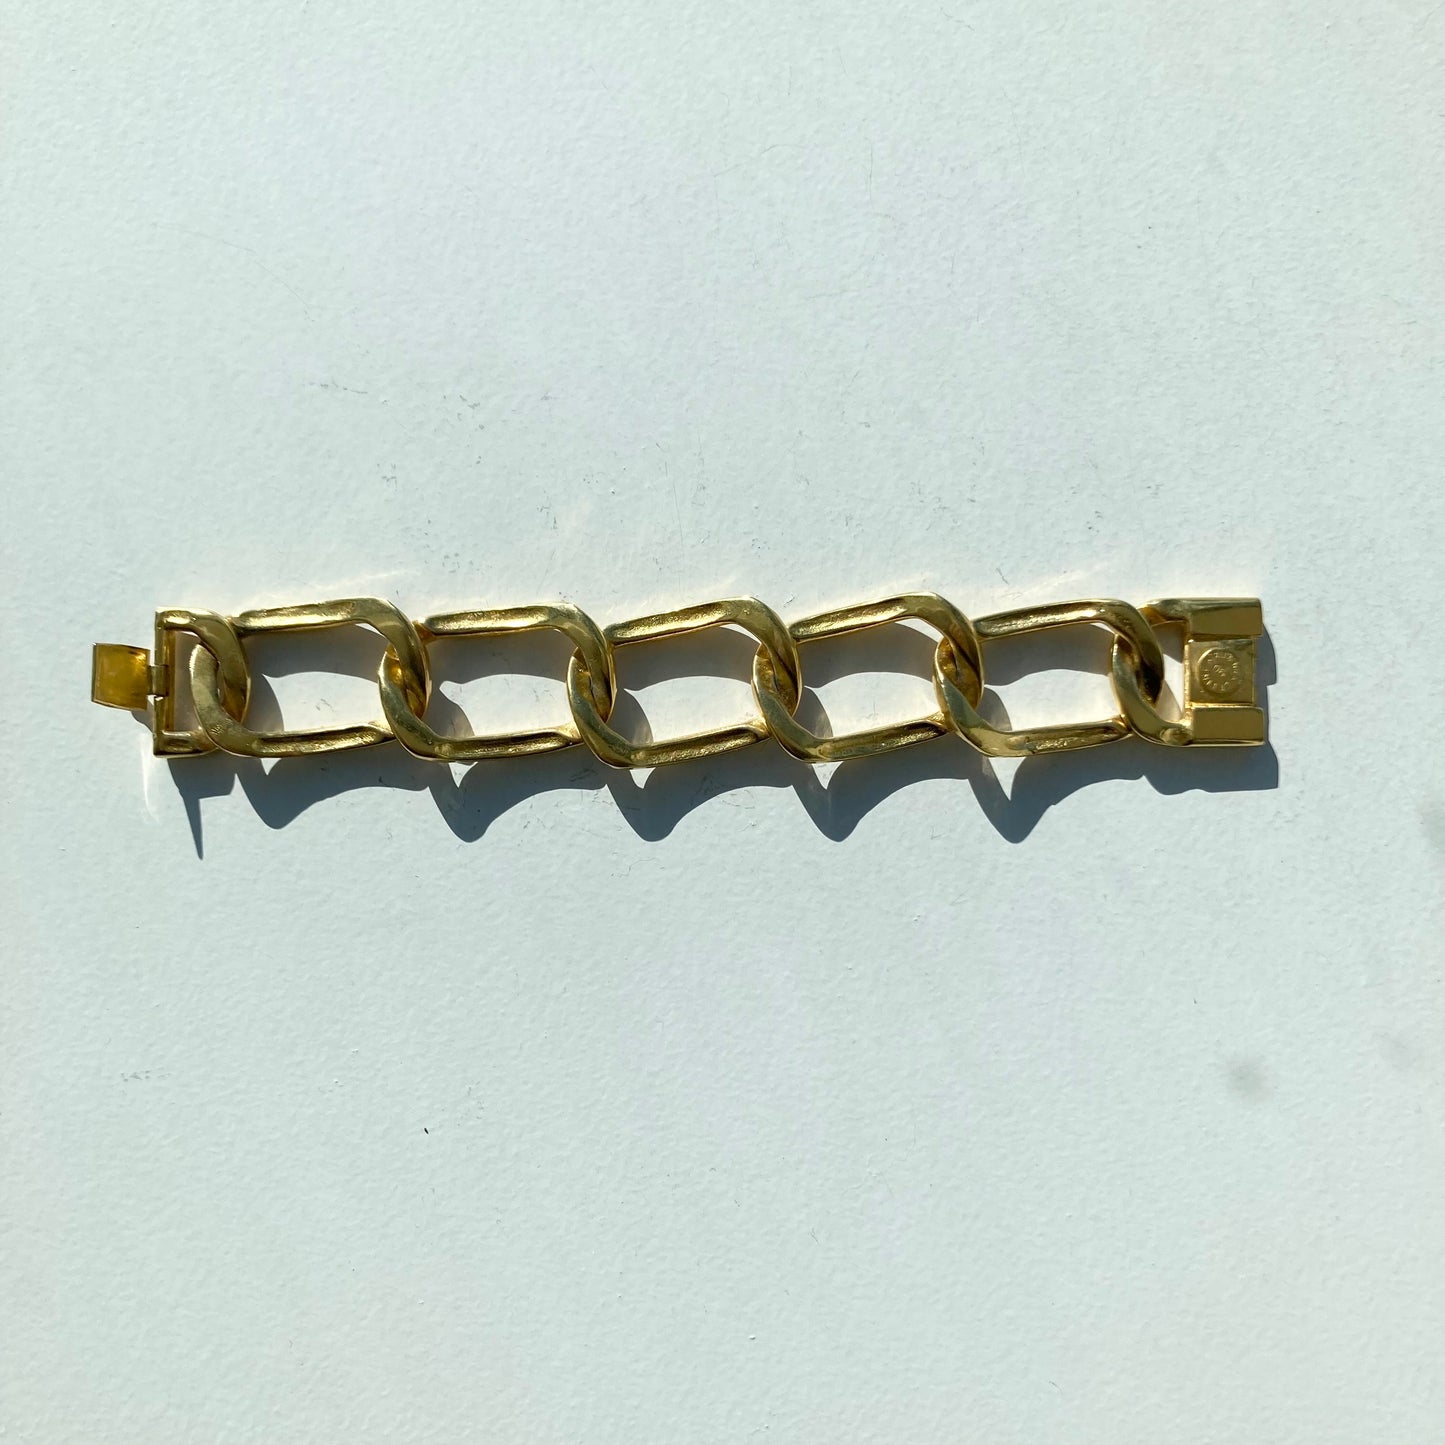 90s Celine Chain bracelet vintage